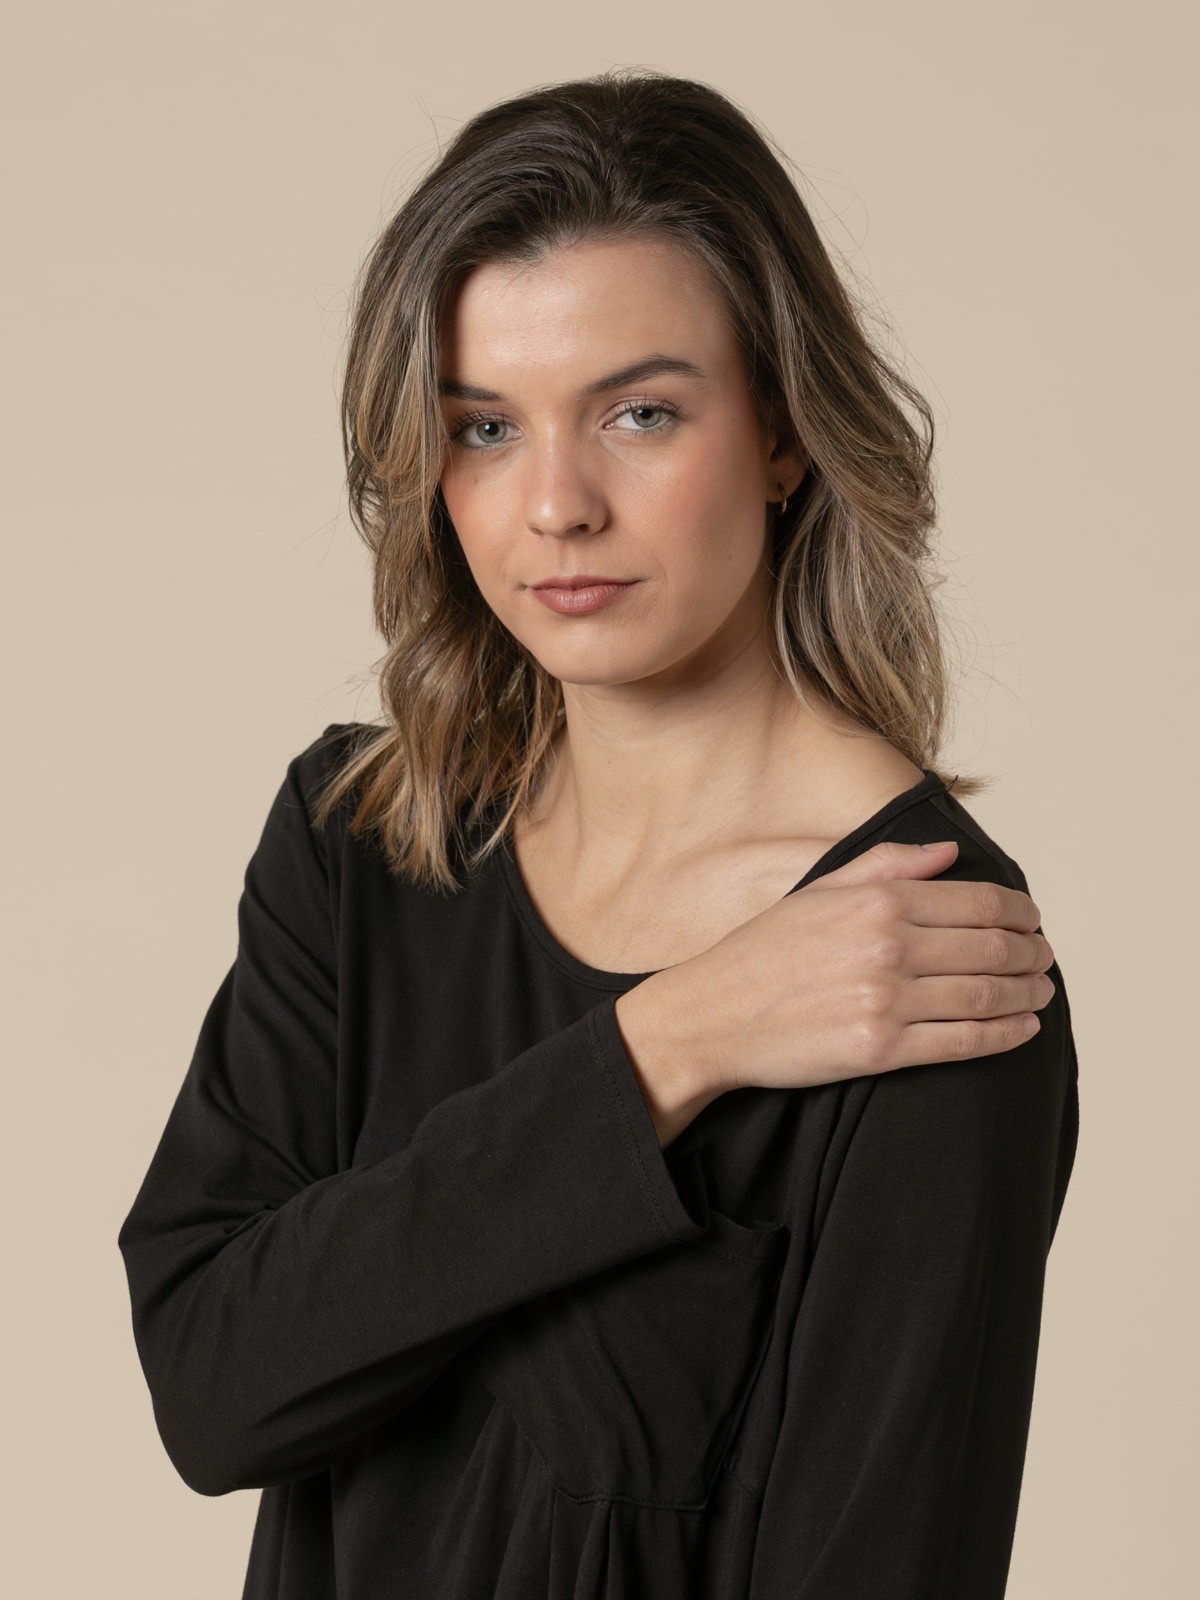 Woman 100% cotton t-shirt with pocket design, mom fit  Blackcolour